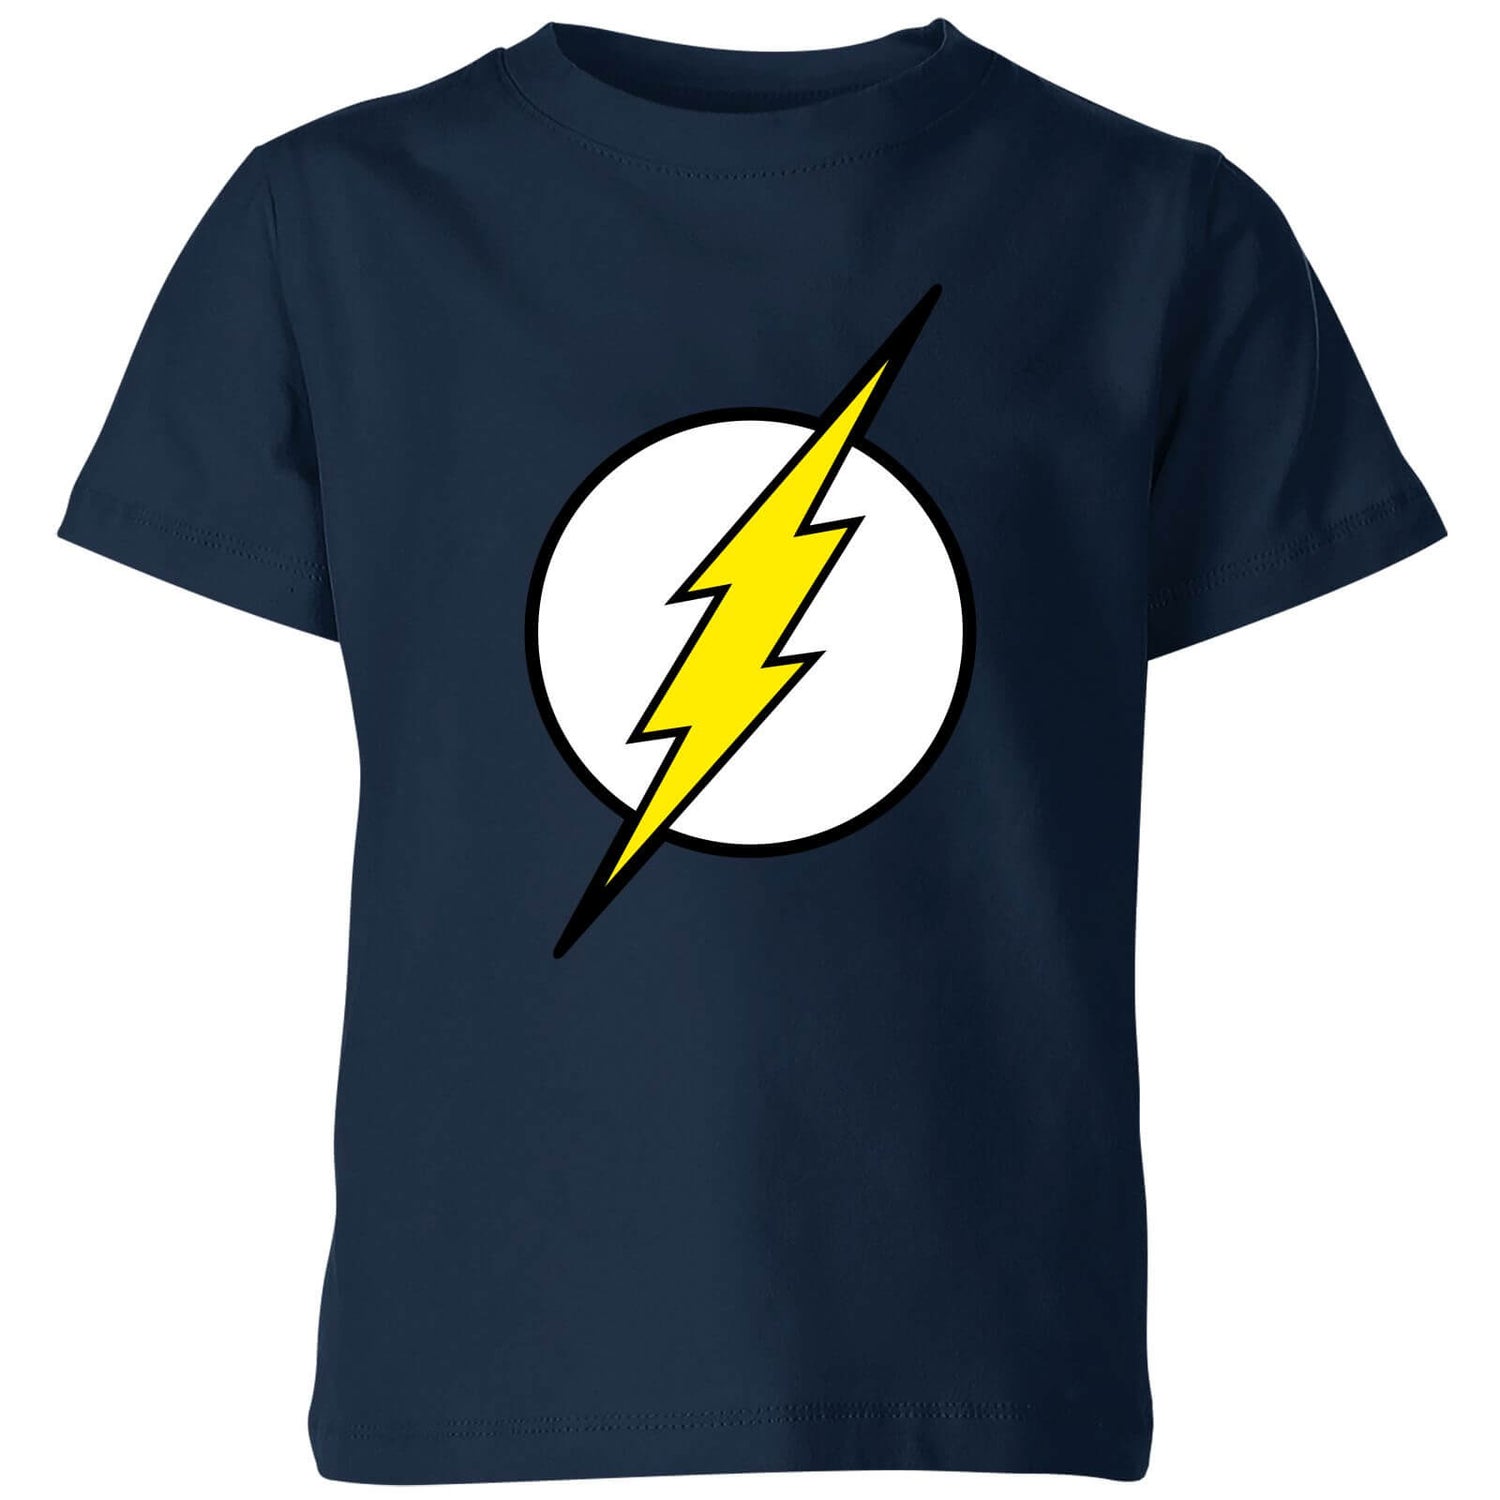 Justice League Flash Logo Kids' T-Shirt - Navy